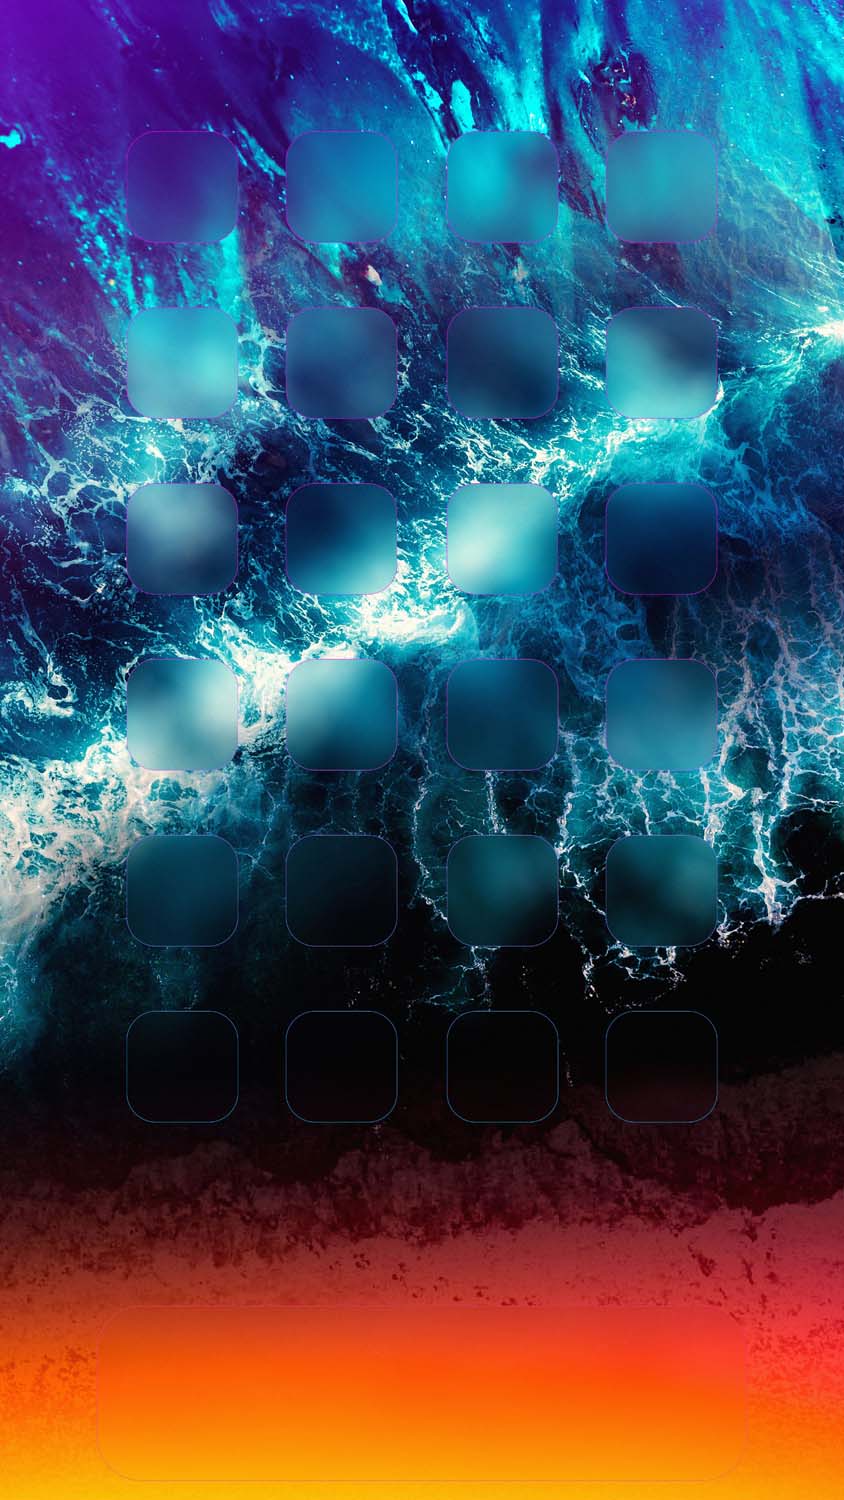 iOS App Dock Ocean iPhone Wallpaper HD 1